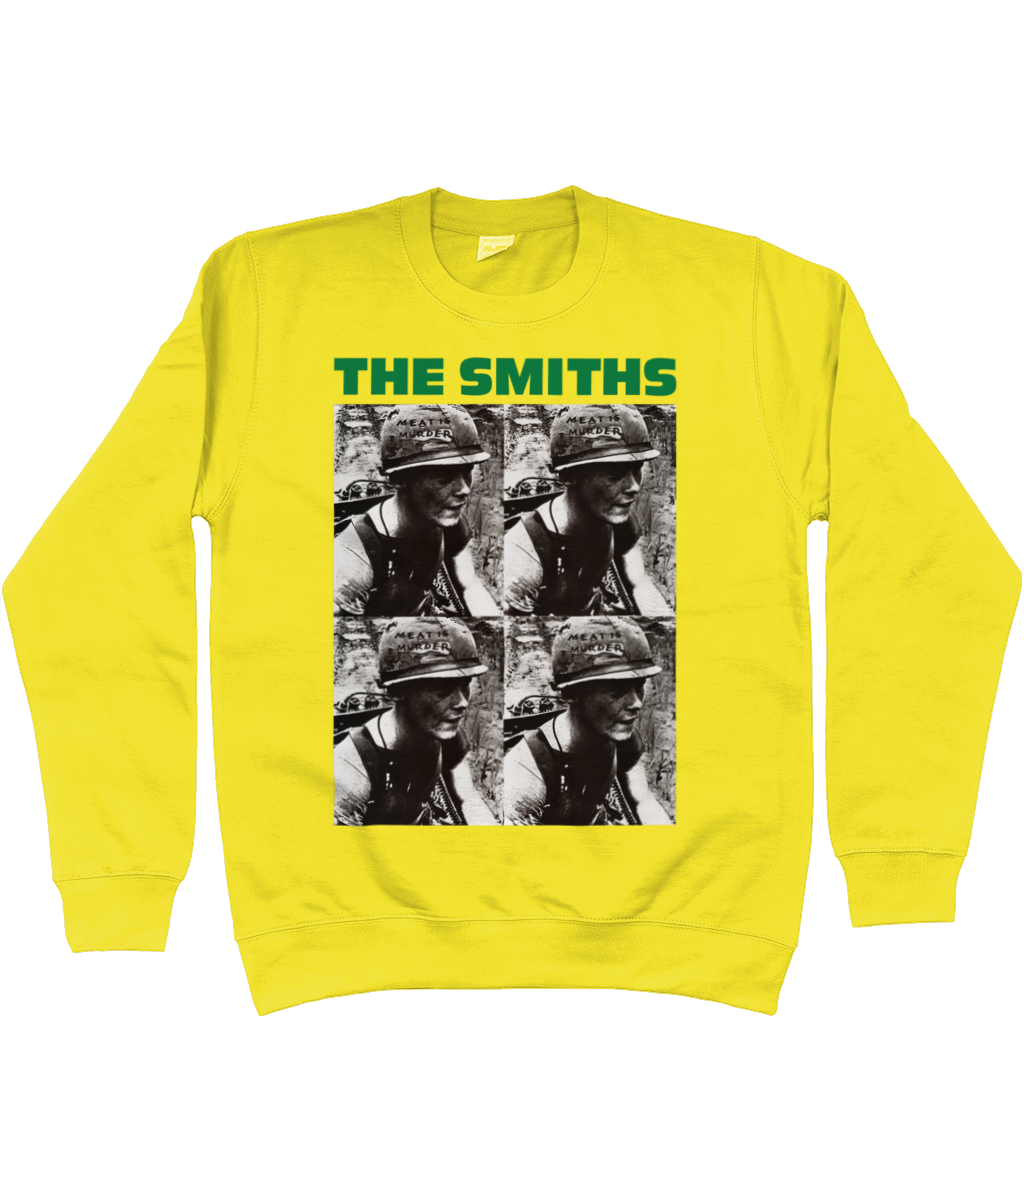 THE SMITHS - Meat Is Murder - 1985 - Sweatshirt